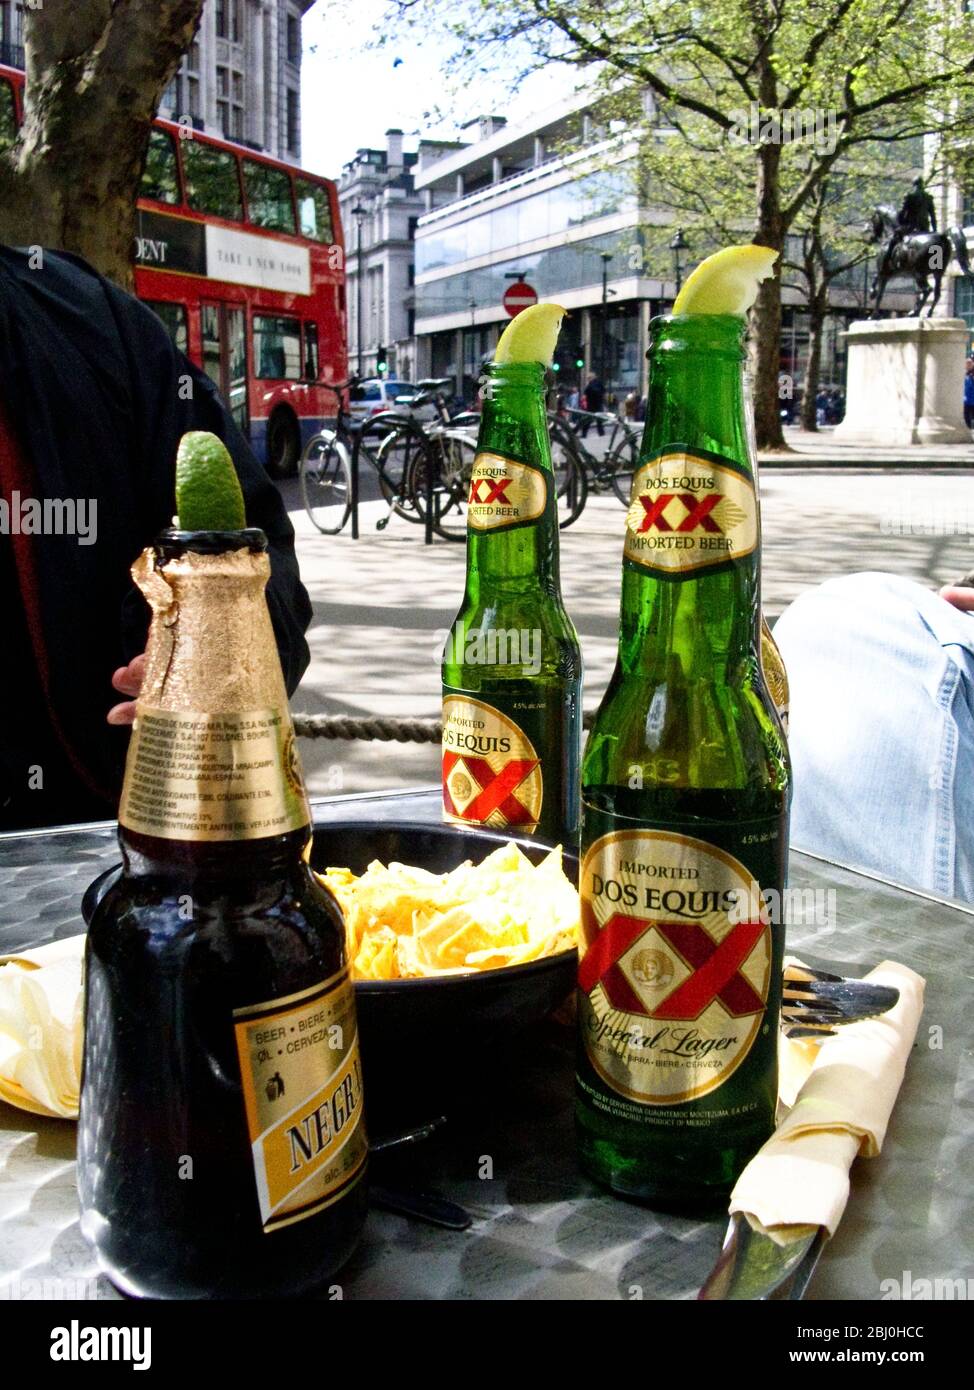 Mexikanisches Bier in der Frühlingssonne im Café am Trafalgar Square in London - Stockfoto